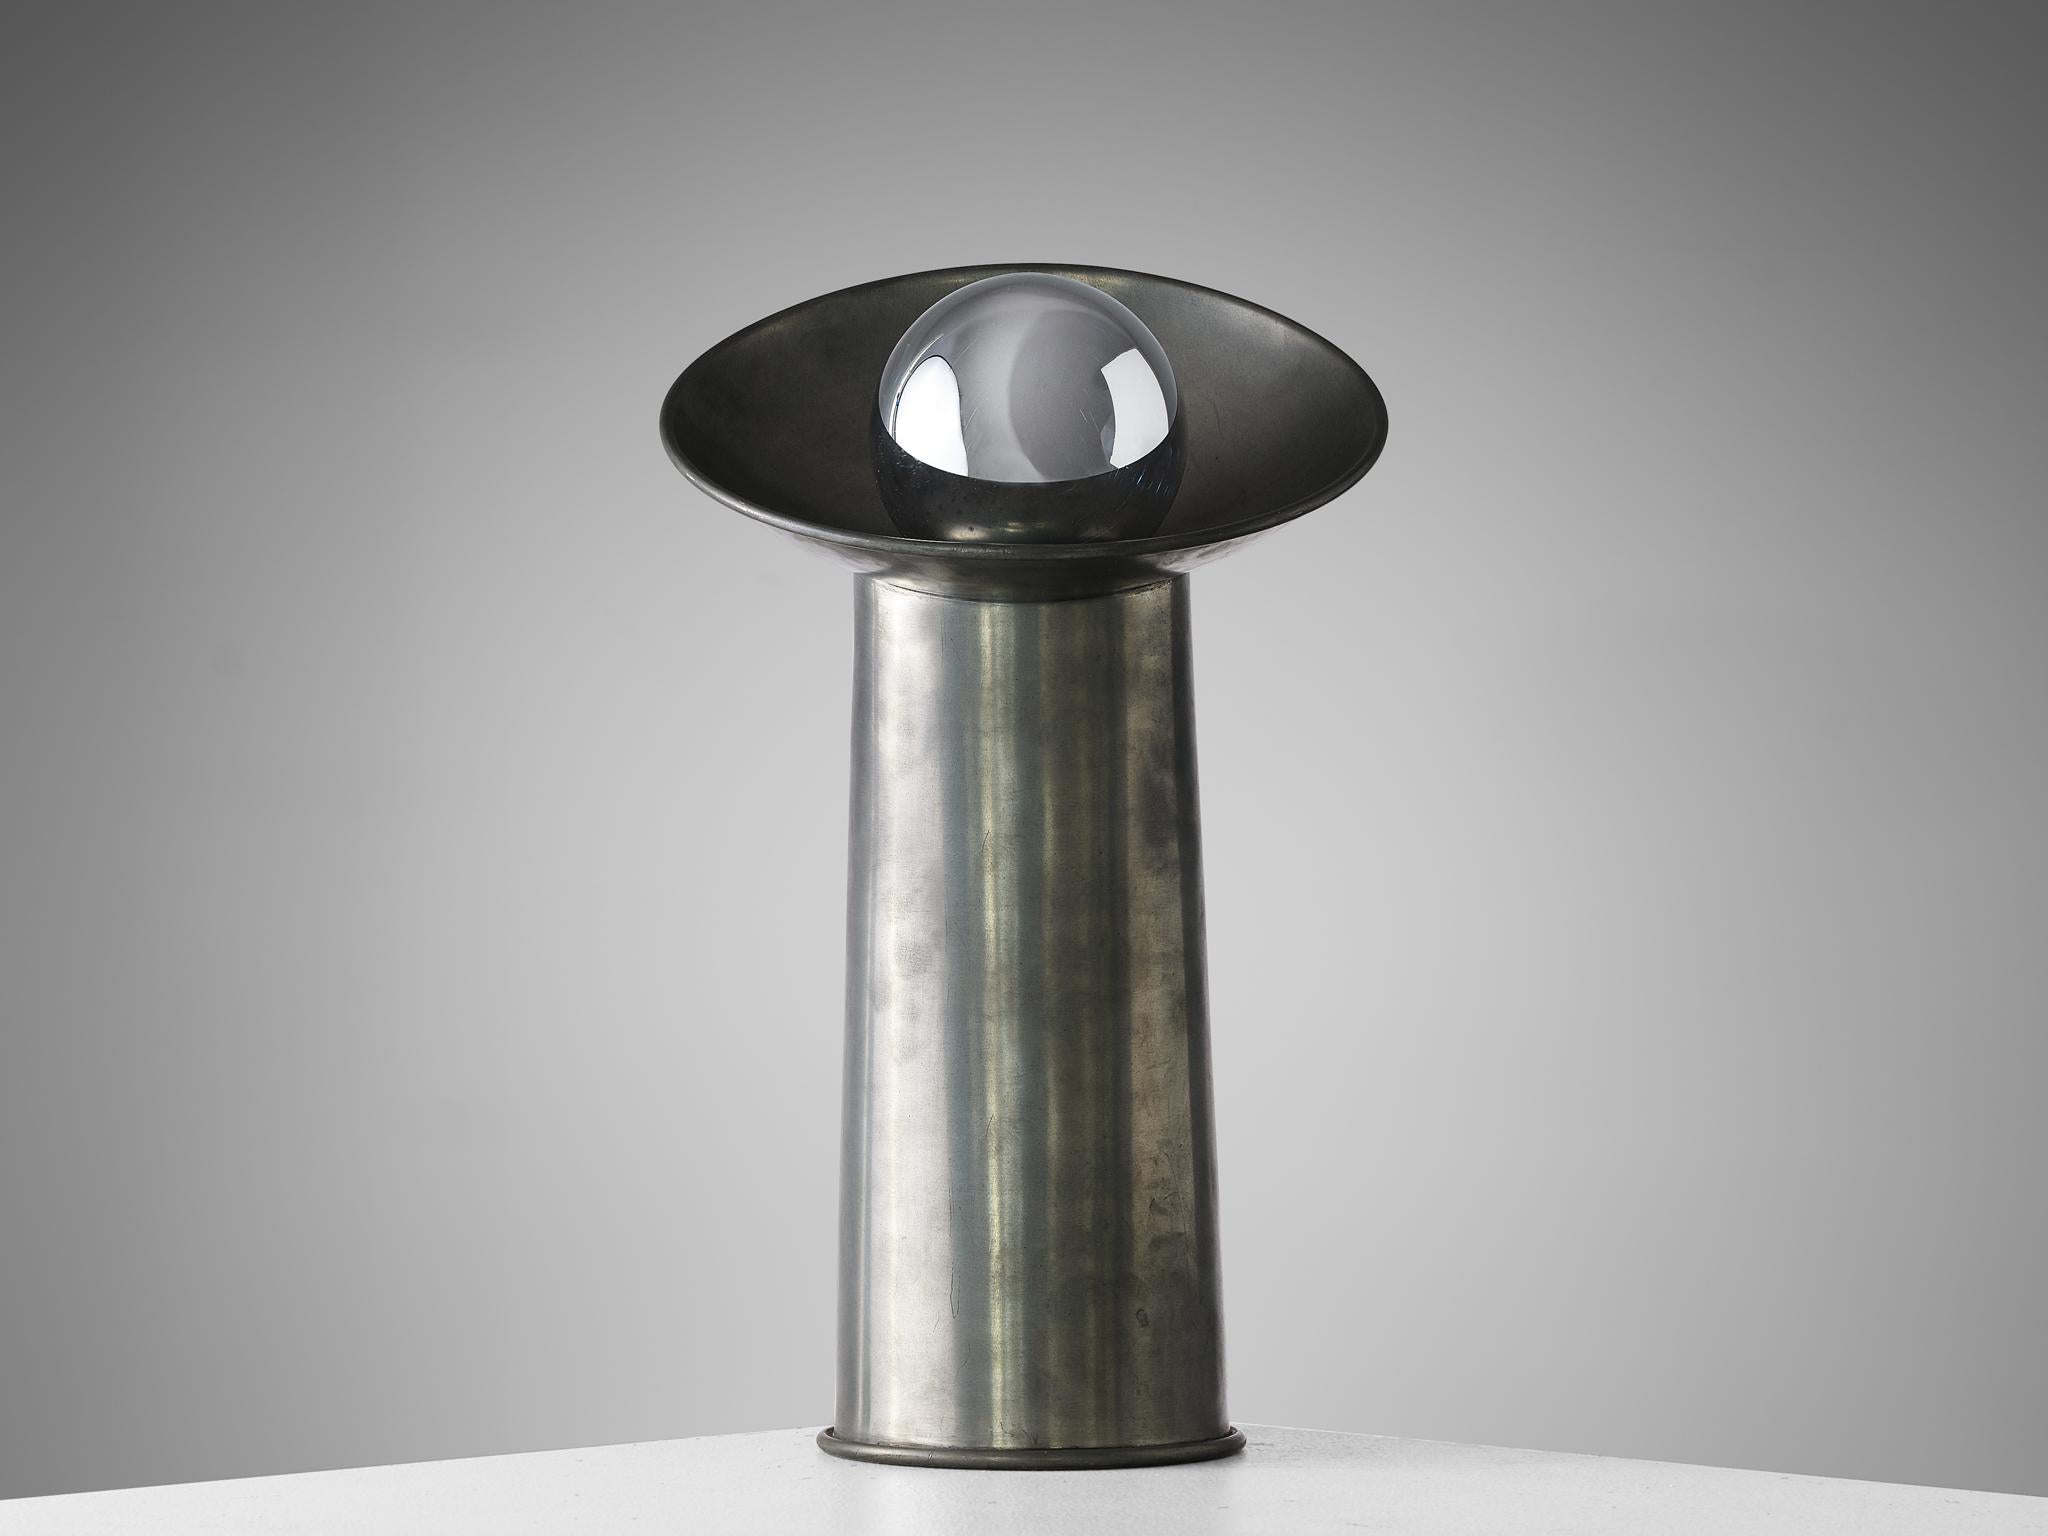 Gjlla Giani for Nucleo Sormani ‘Radar’ Table Lamp in Pewter 1